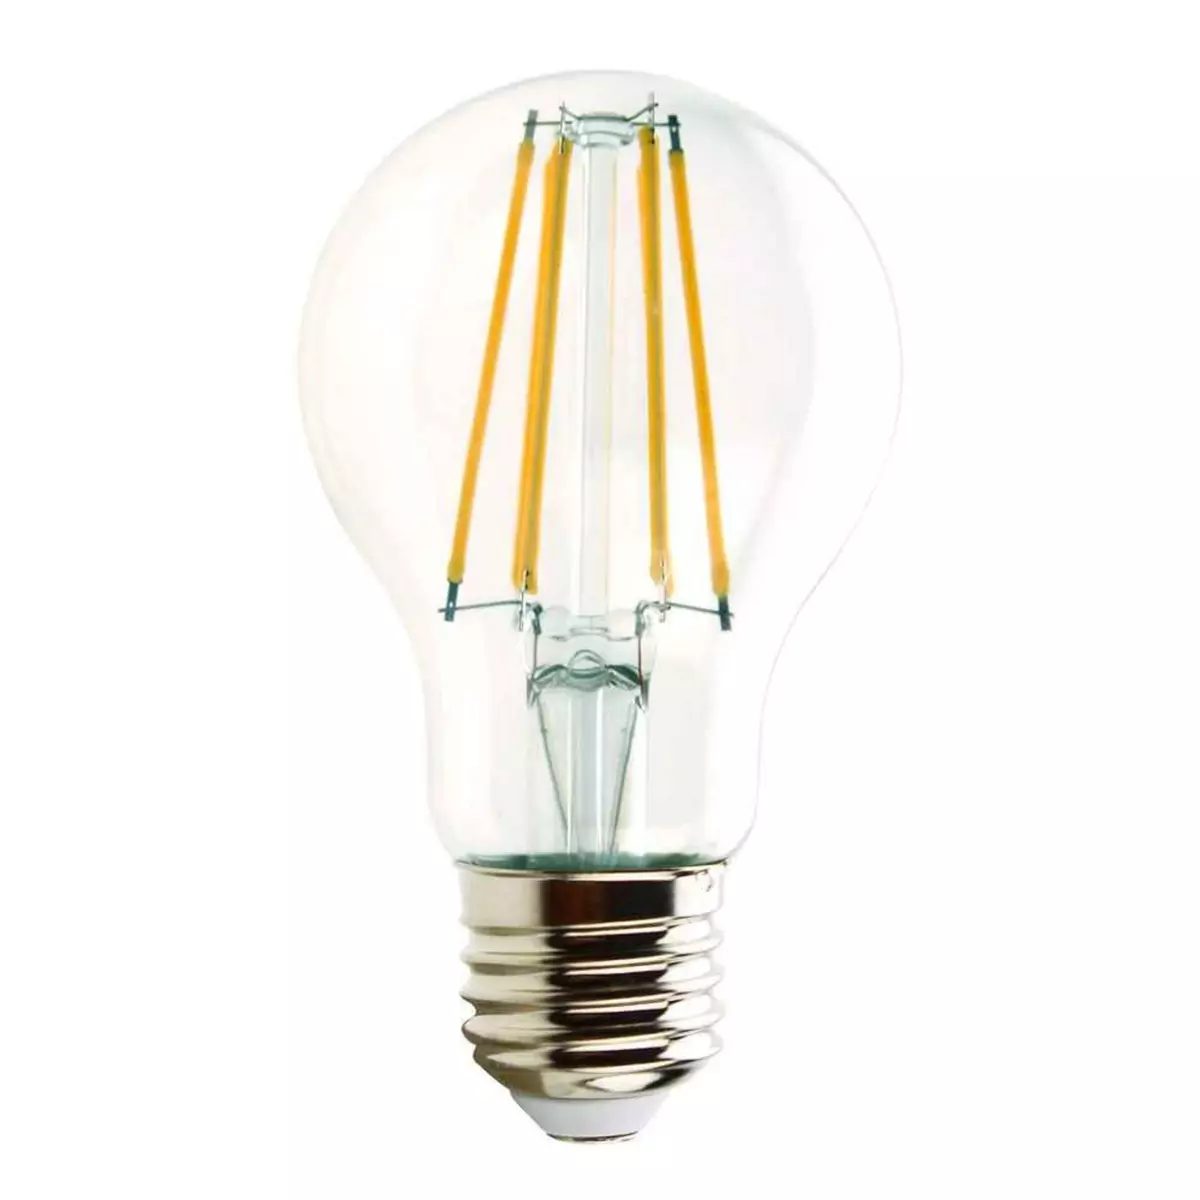 VELAMP Ampoule à filament LED, Standard A60, 8W / 1055lm, culot E27, 2700K